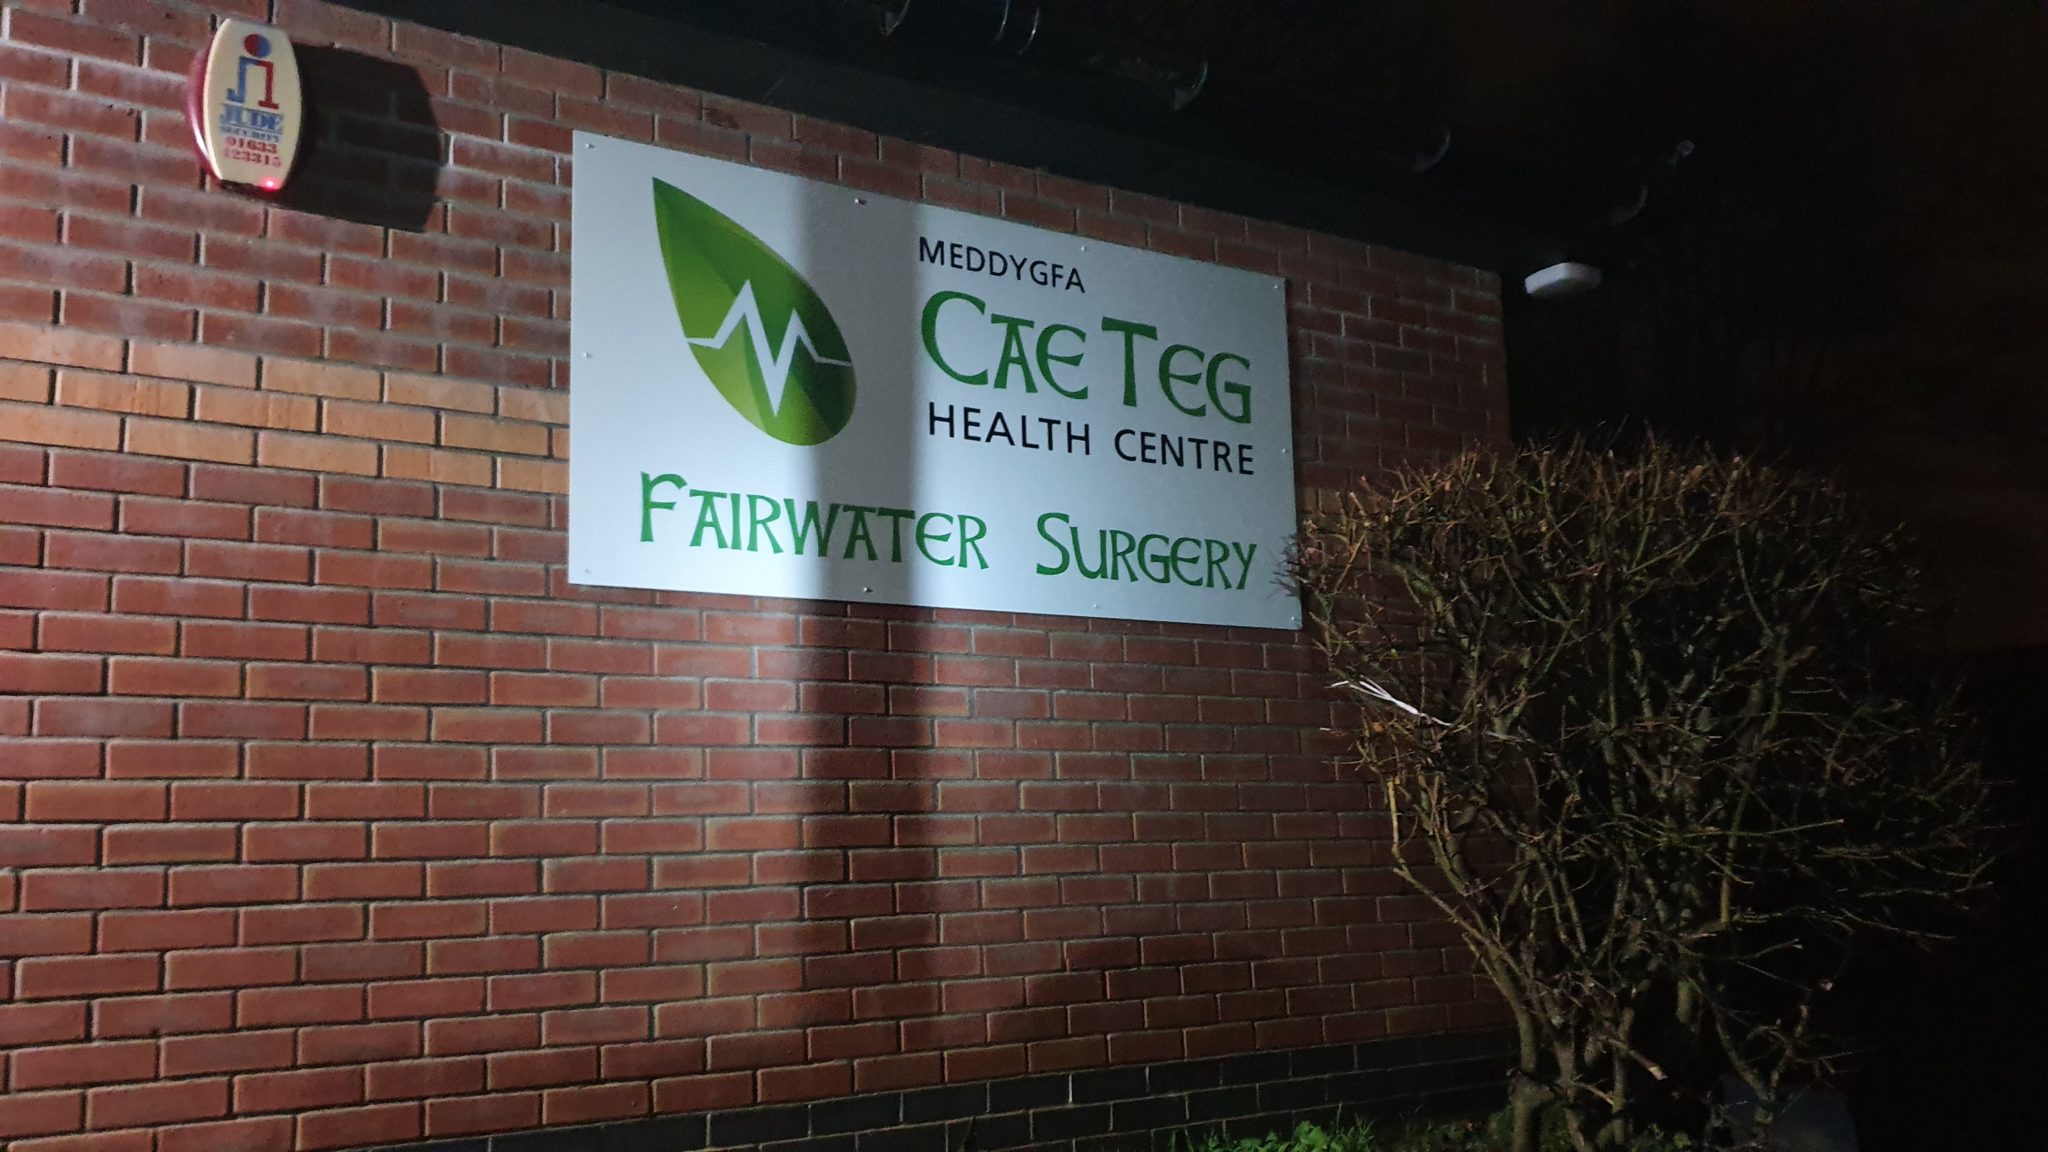 Fairwater Surgery in Cwmbran